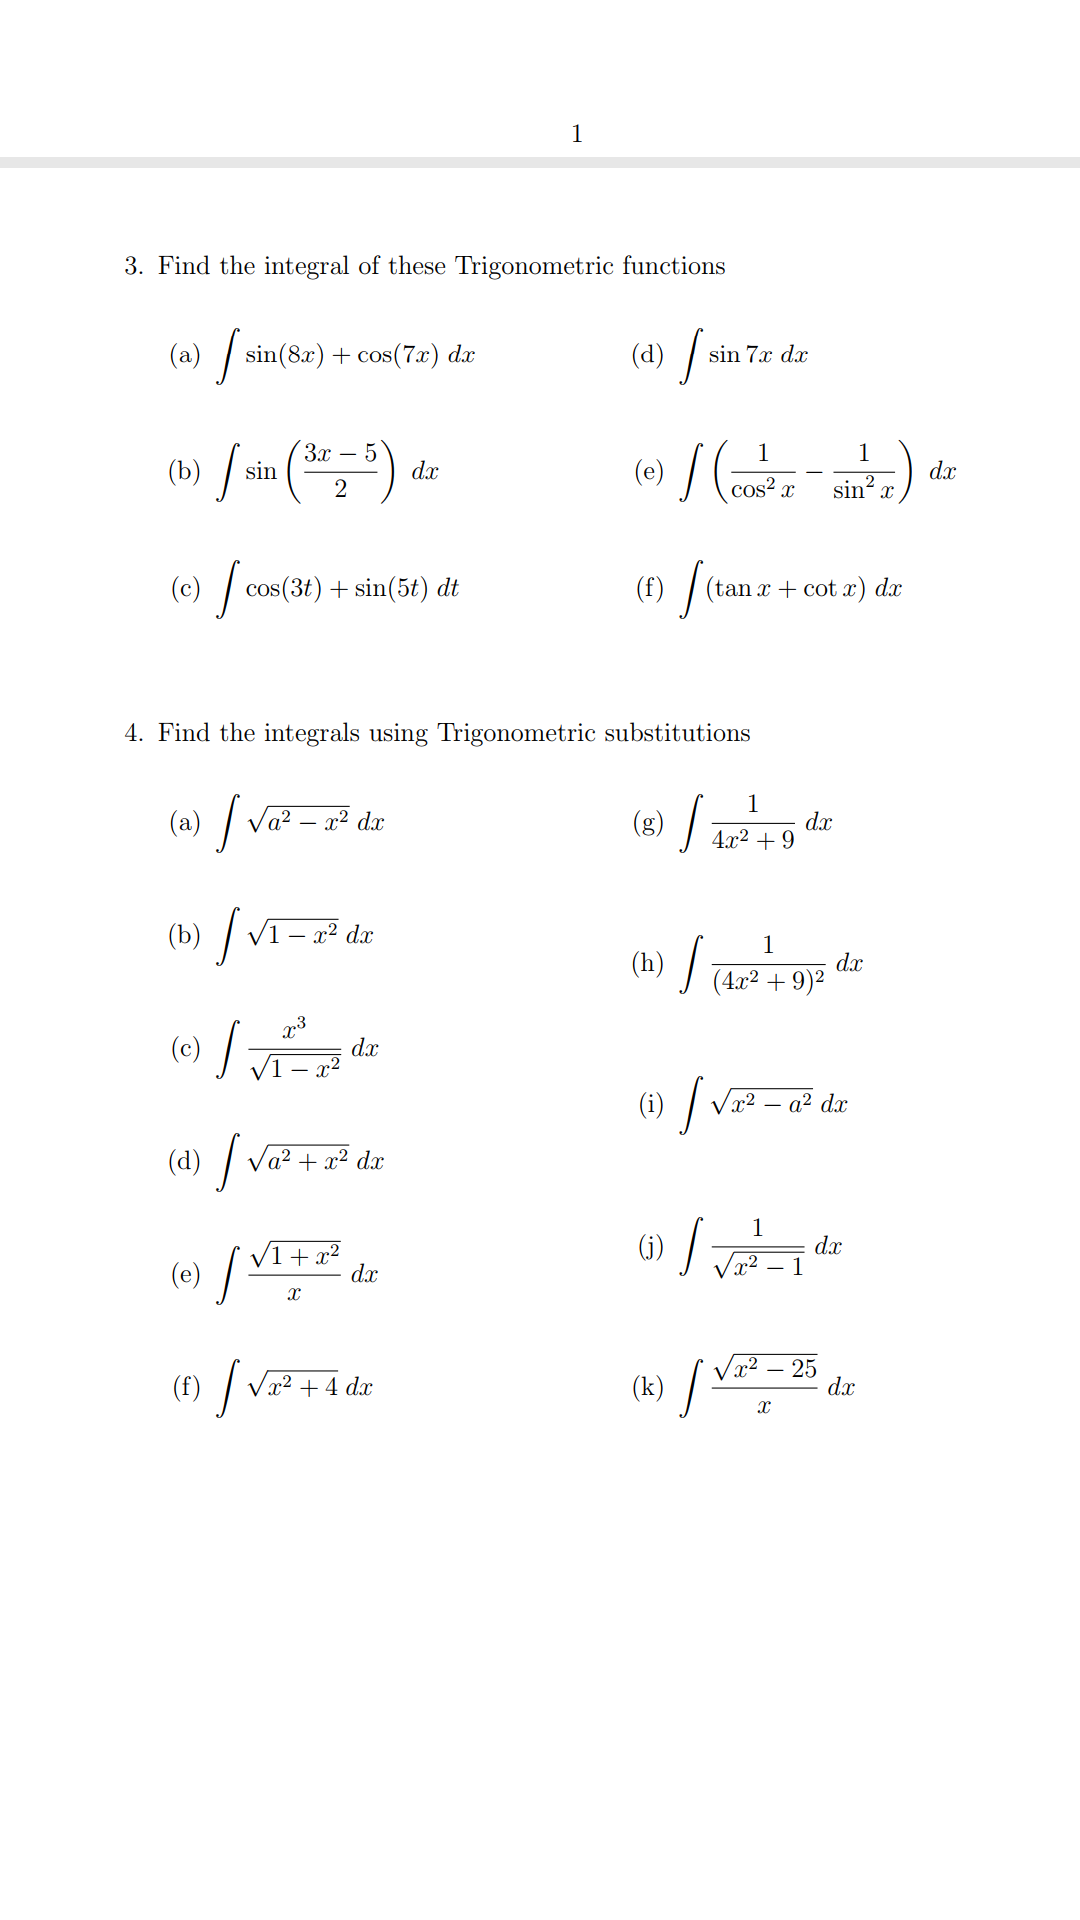 Find the integrals using Trigonometric substitutions
1
(a) /
Va? – x² dx
(g)
-
4.x2
